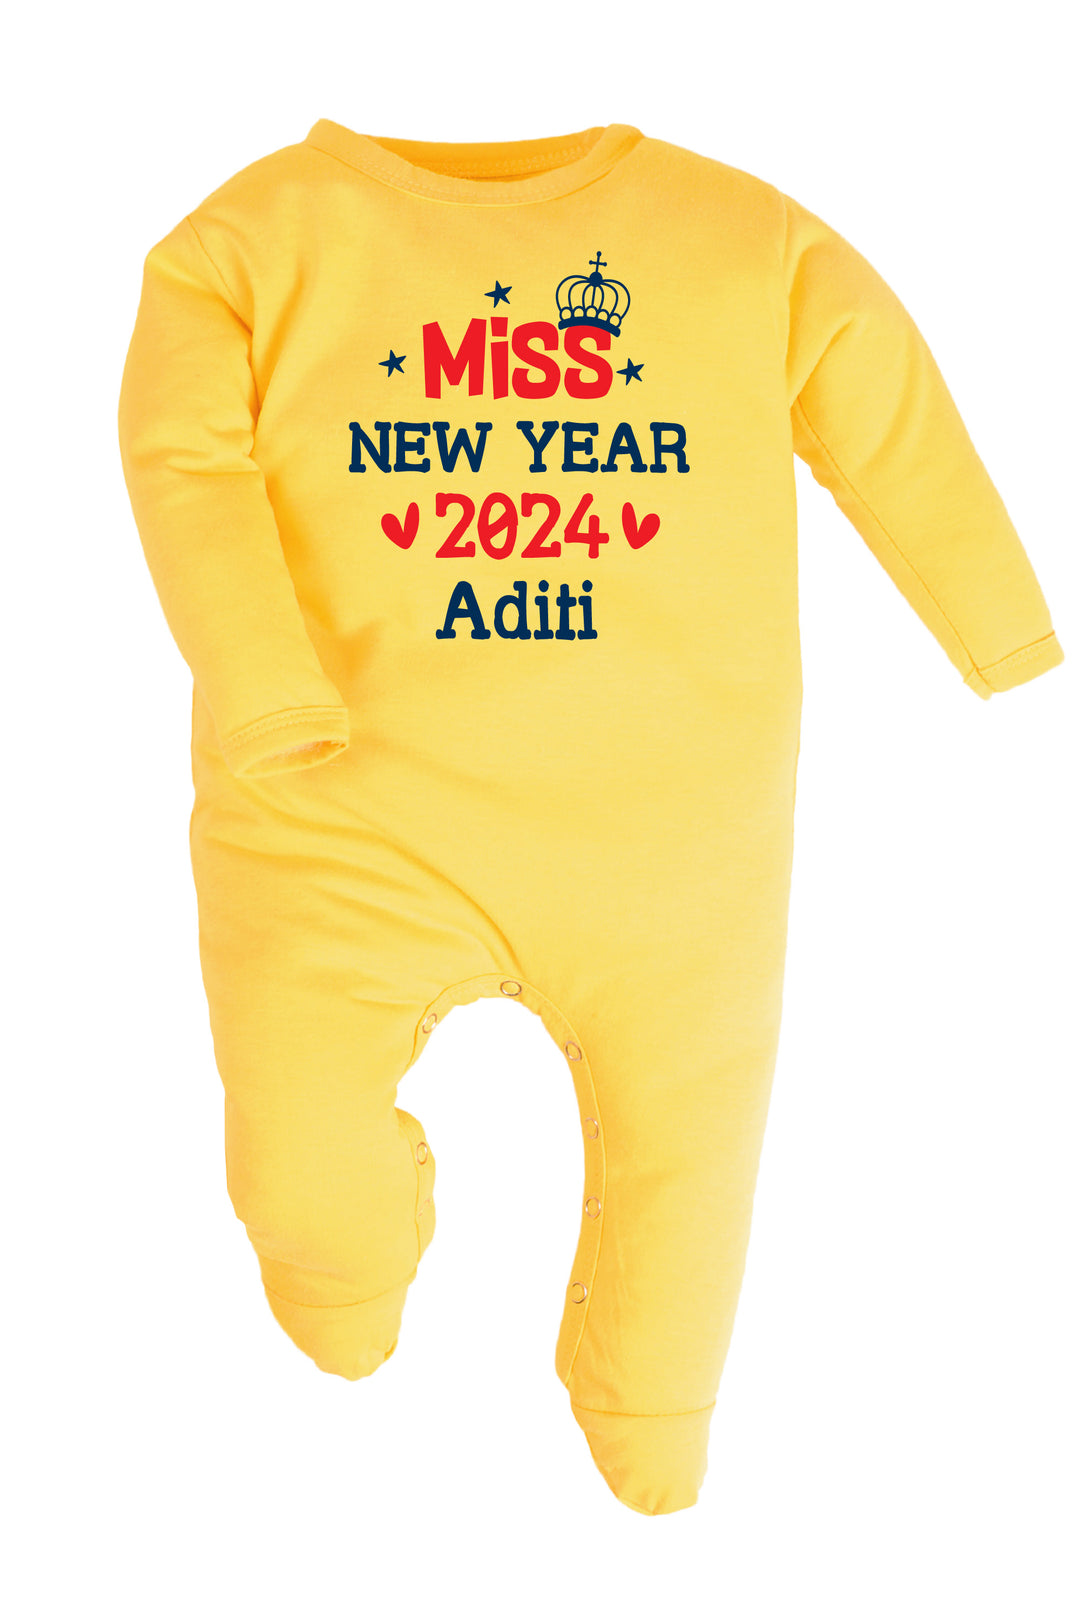 Miss New Year Baby Romper | Onesies w/ Custom Name